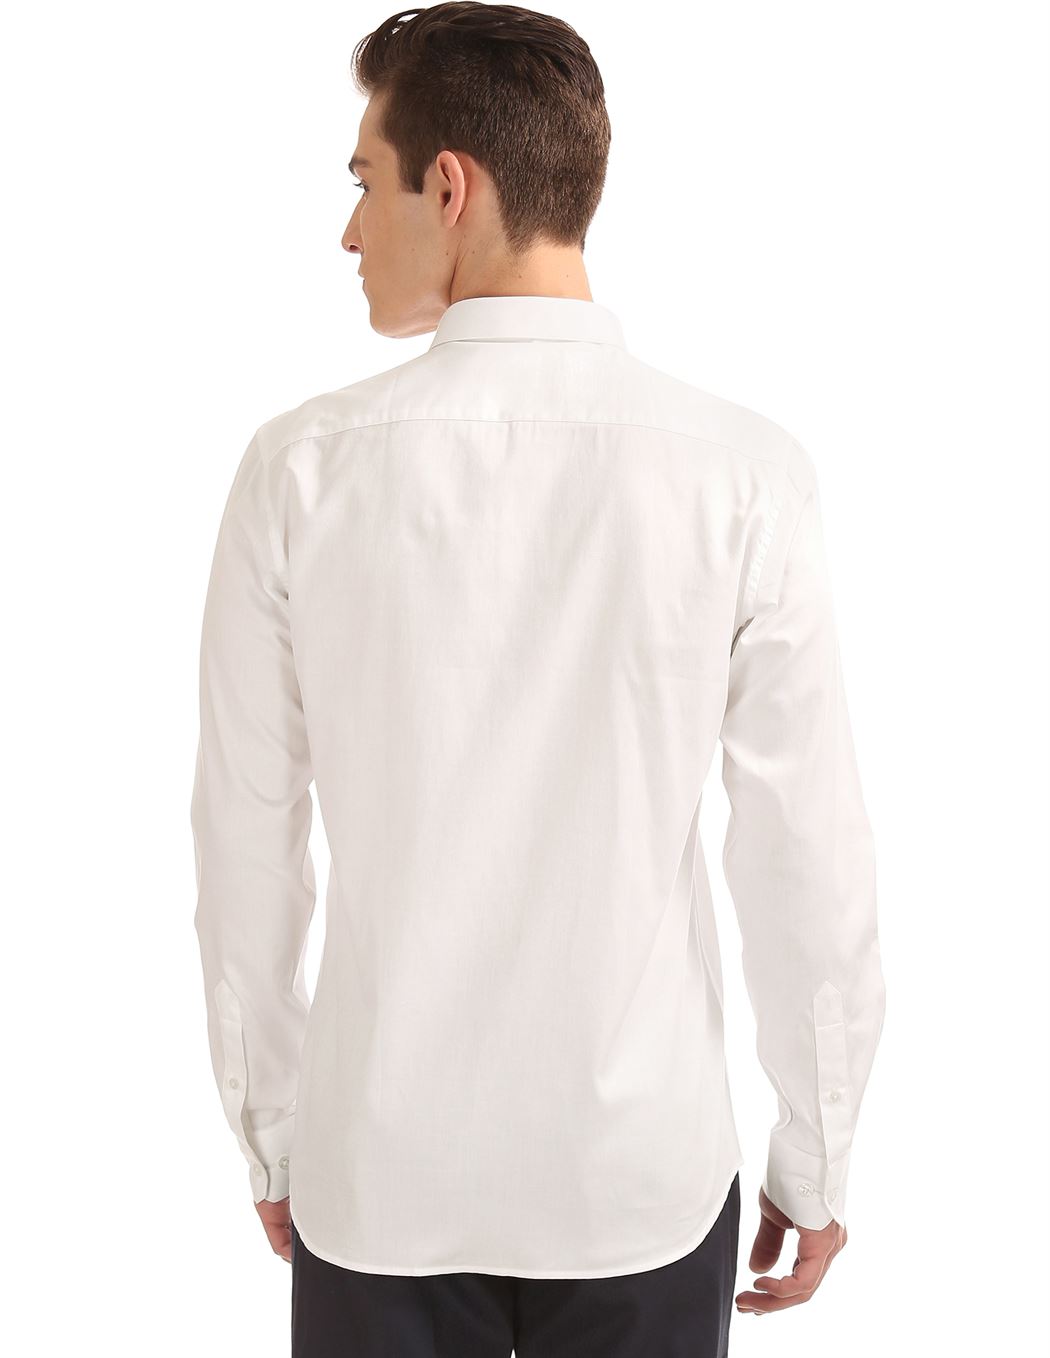 U.S. Polo Assn. Men White Formal Shirt